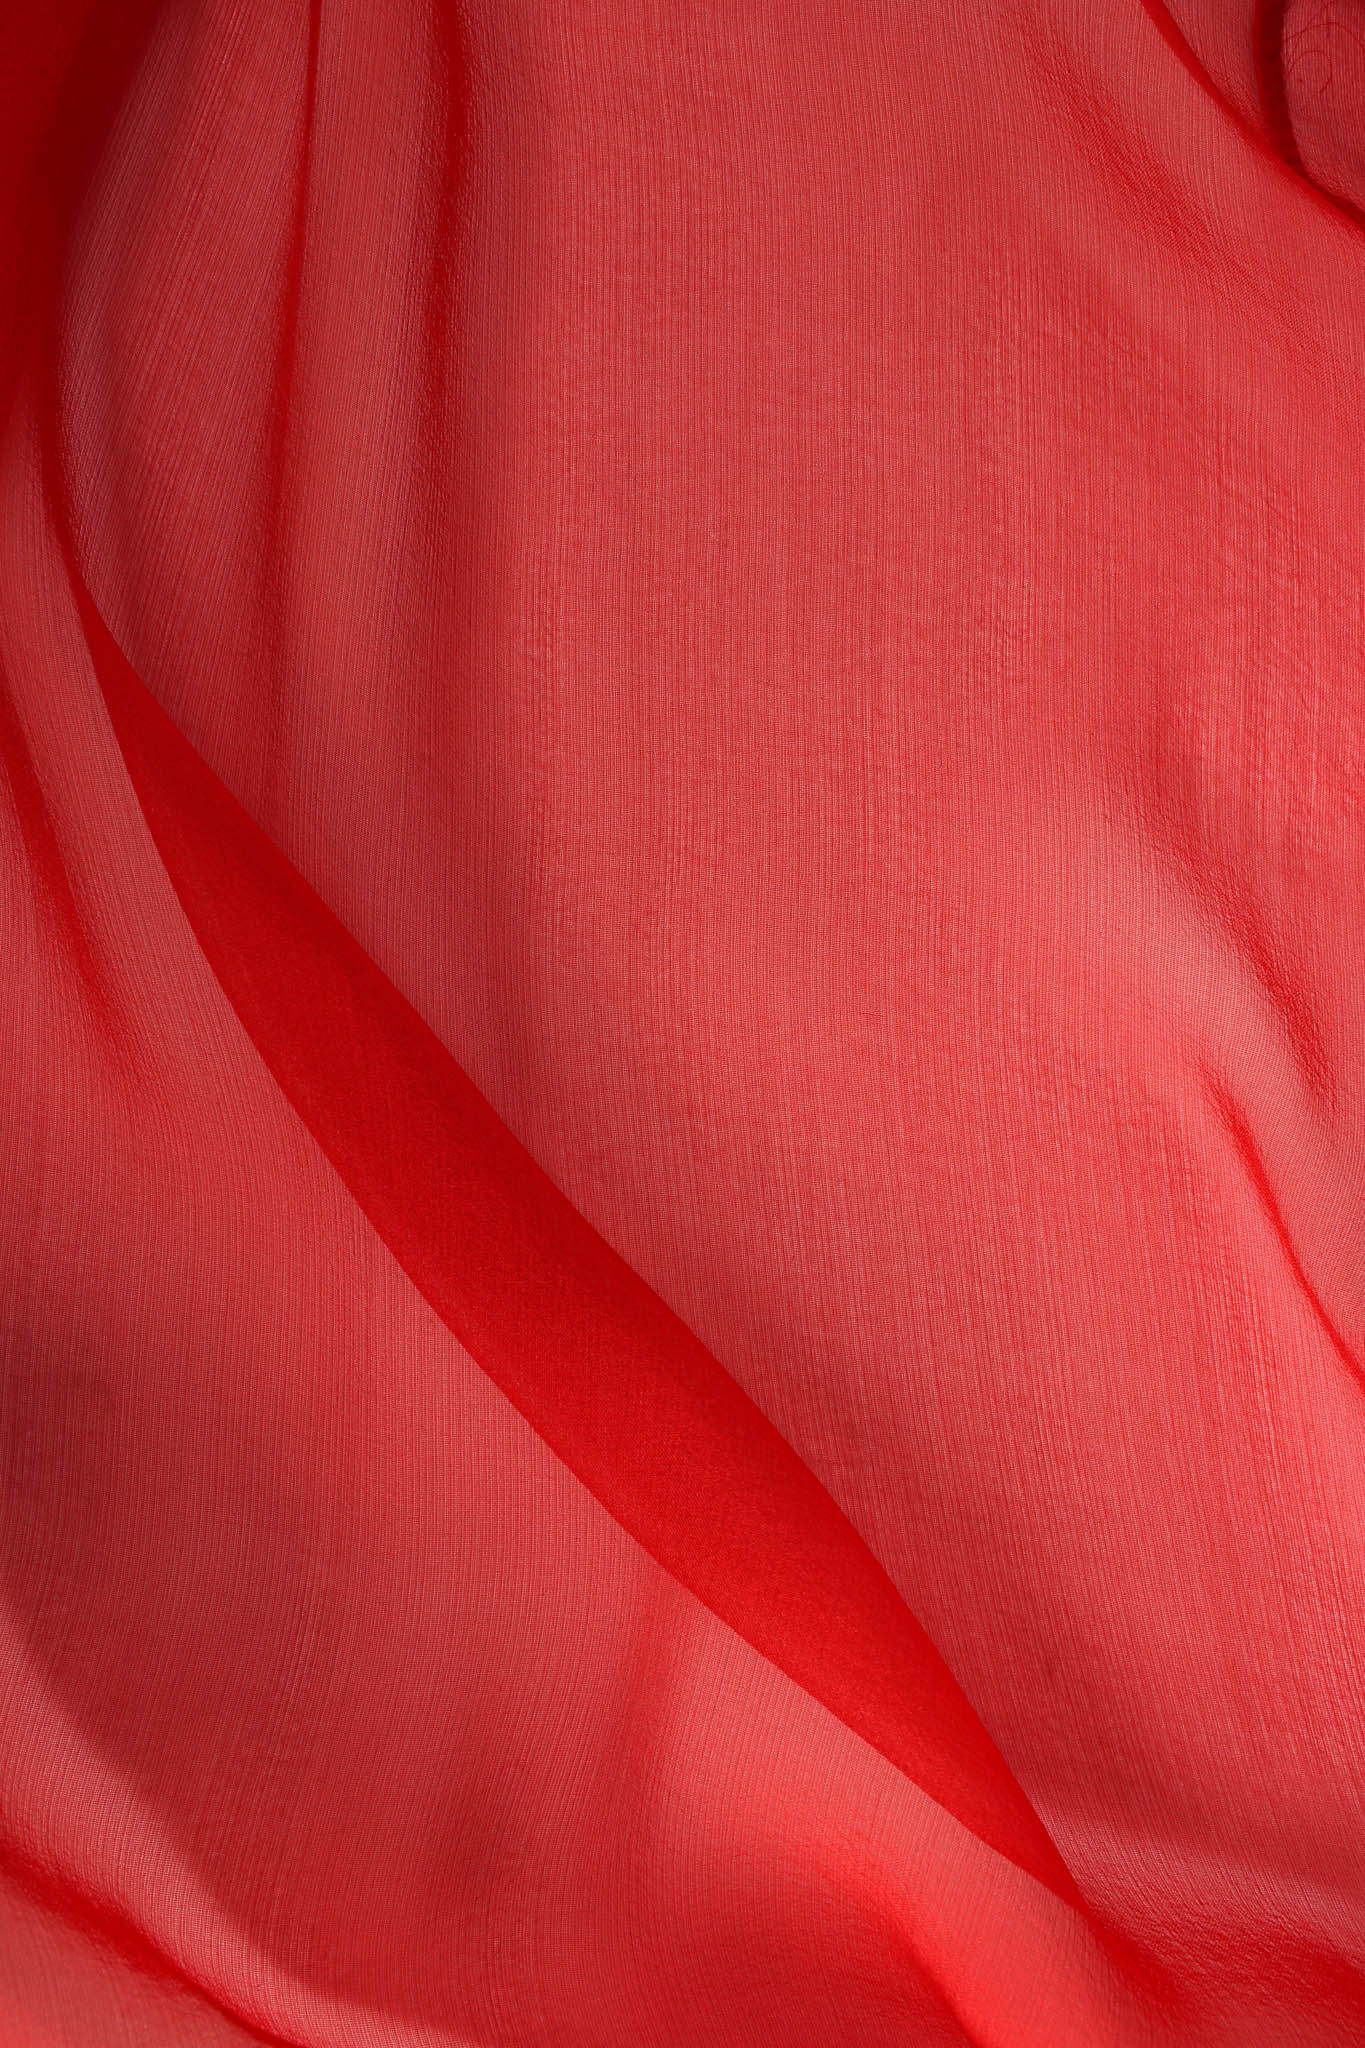 Valentino Rose Velvet Silk Panel Dress fabric @ Recess Los Angeles 